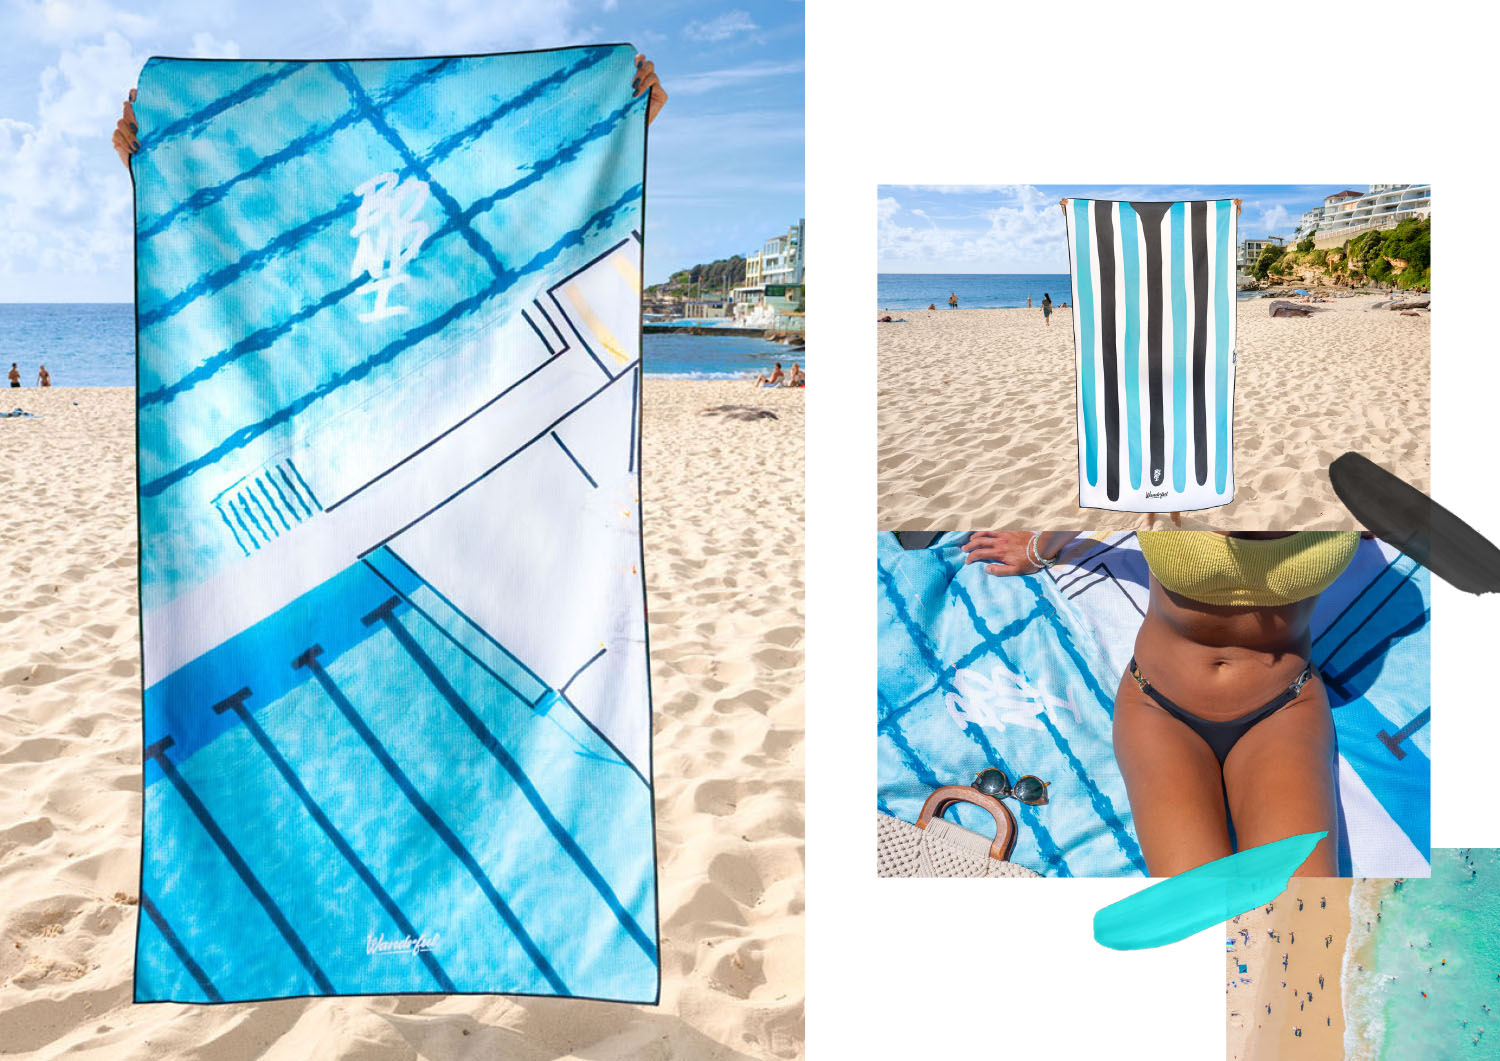 Wandrful sand-free beach towels at Bondi Beach. Model using sand-free beach towel.